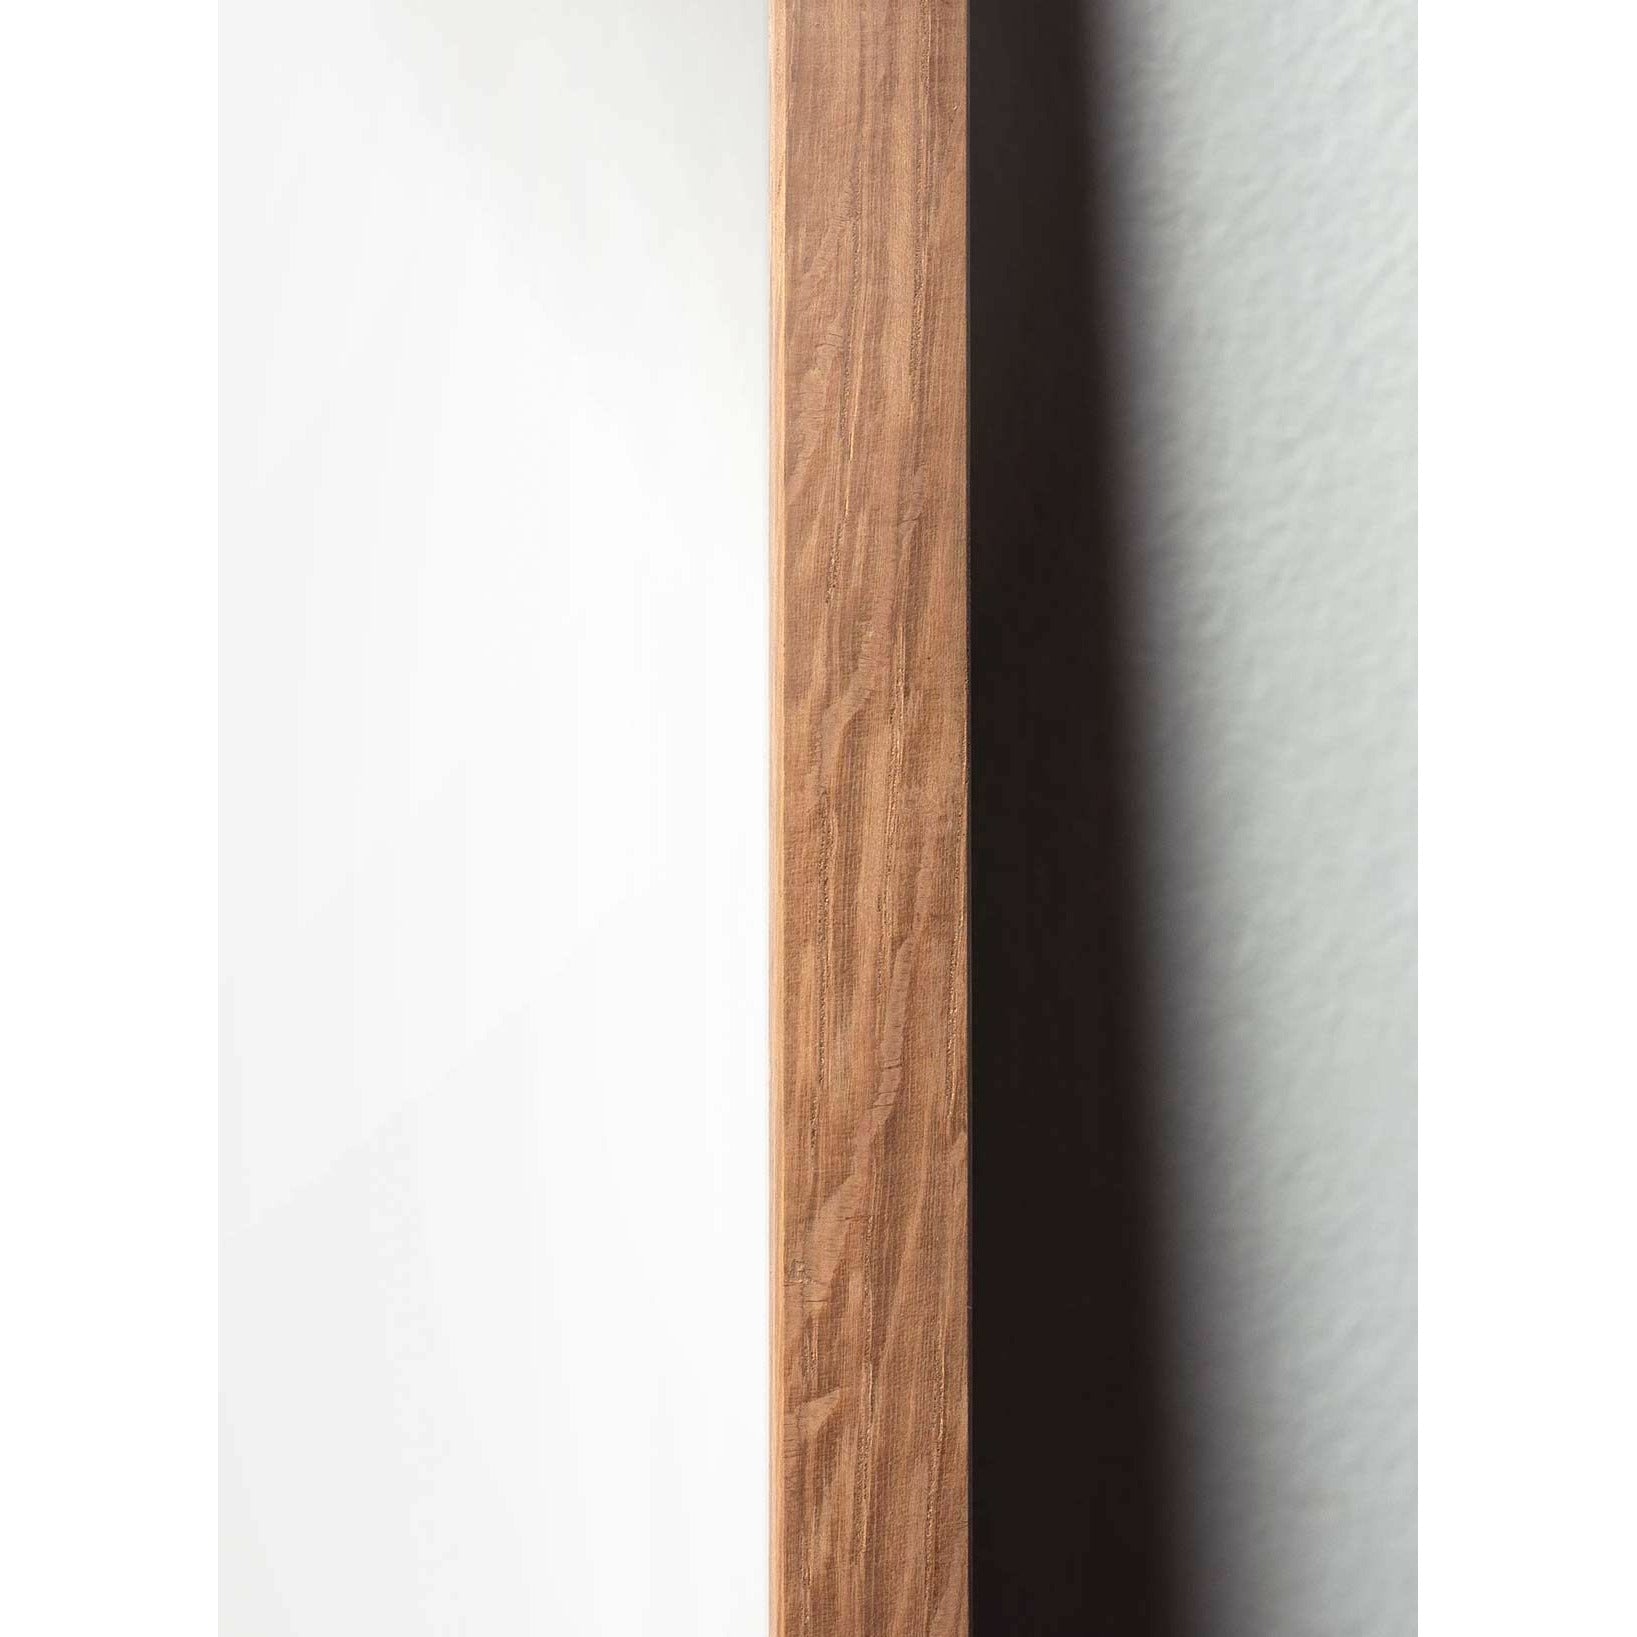 Brainchild Vintergapslinjeposter, ram i lätt trä 30x40 cm, vit bakgrund